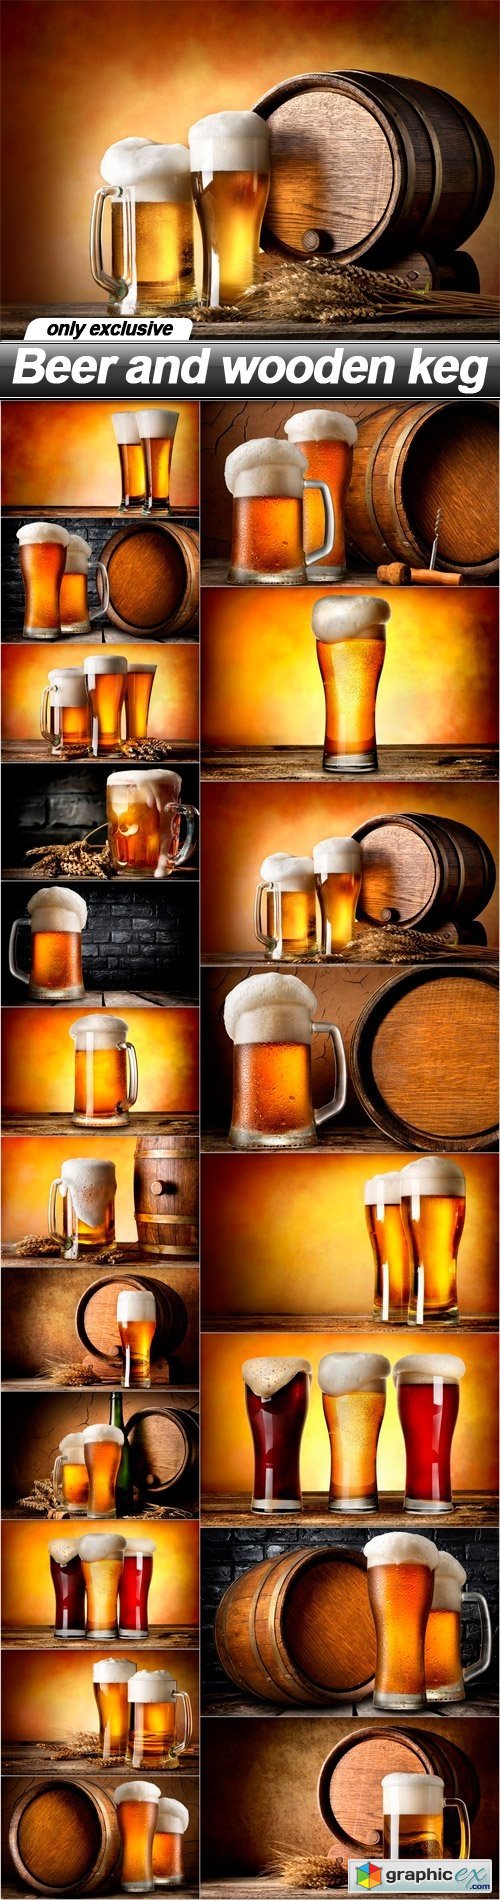 Beer and wooden keg - 20 UHQ JPEG